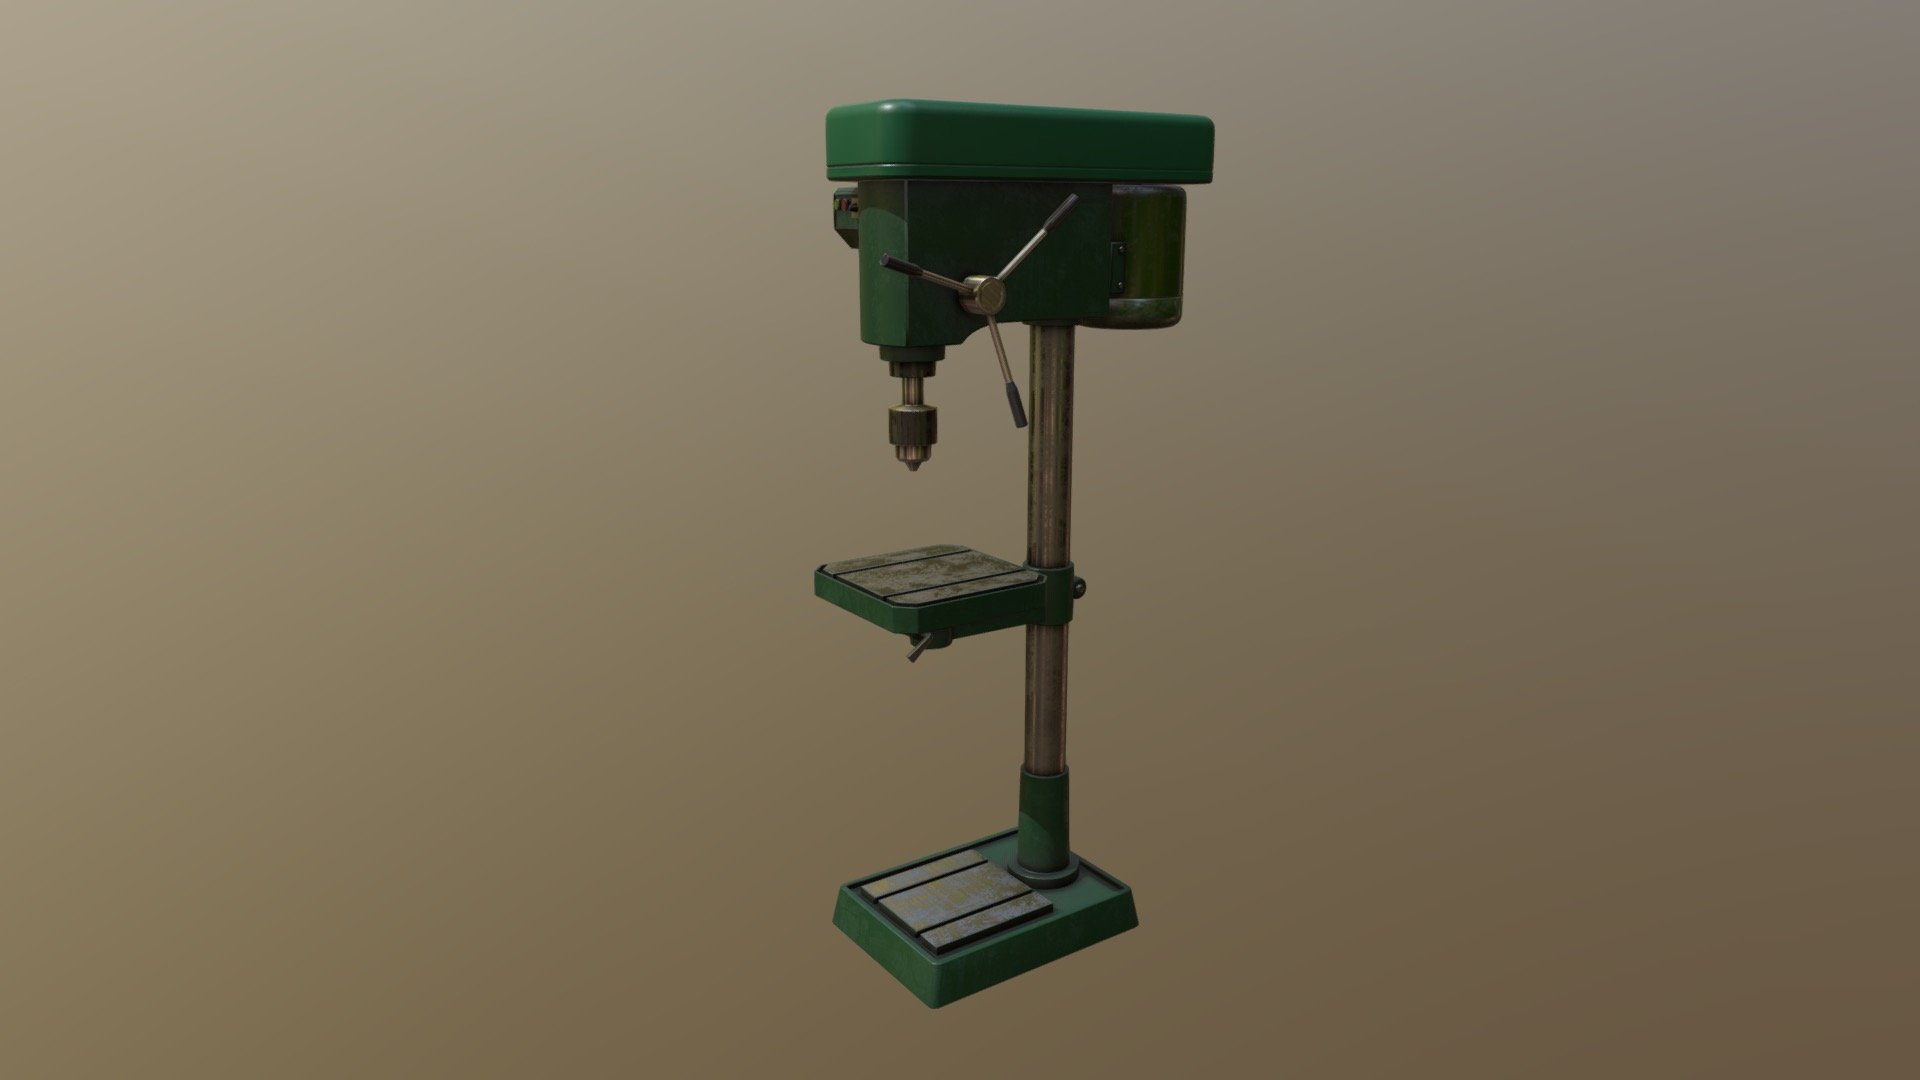 3D model of an old drill press 3d model